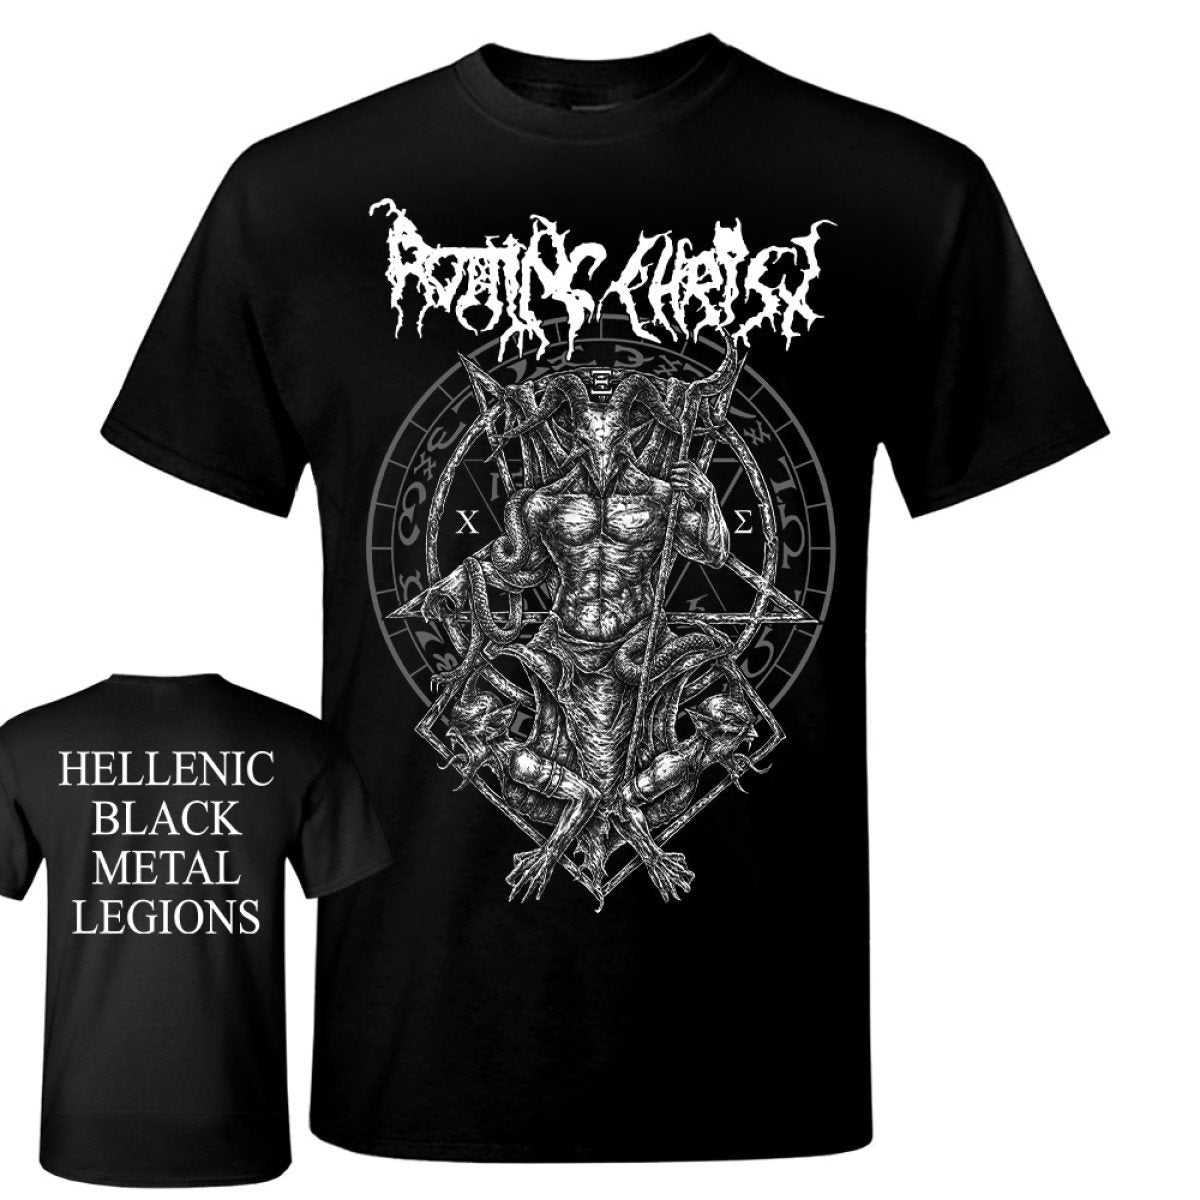 Rotting Christ "Hellenic Black Metal Legions" T shirt